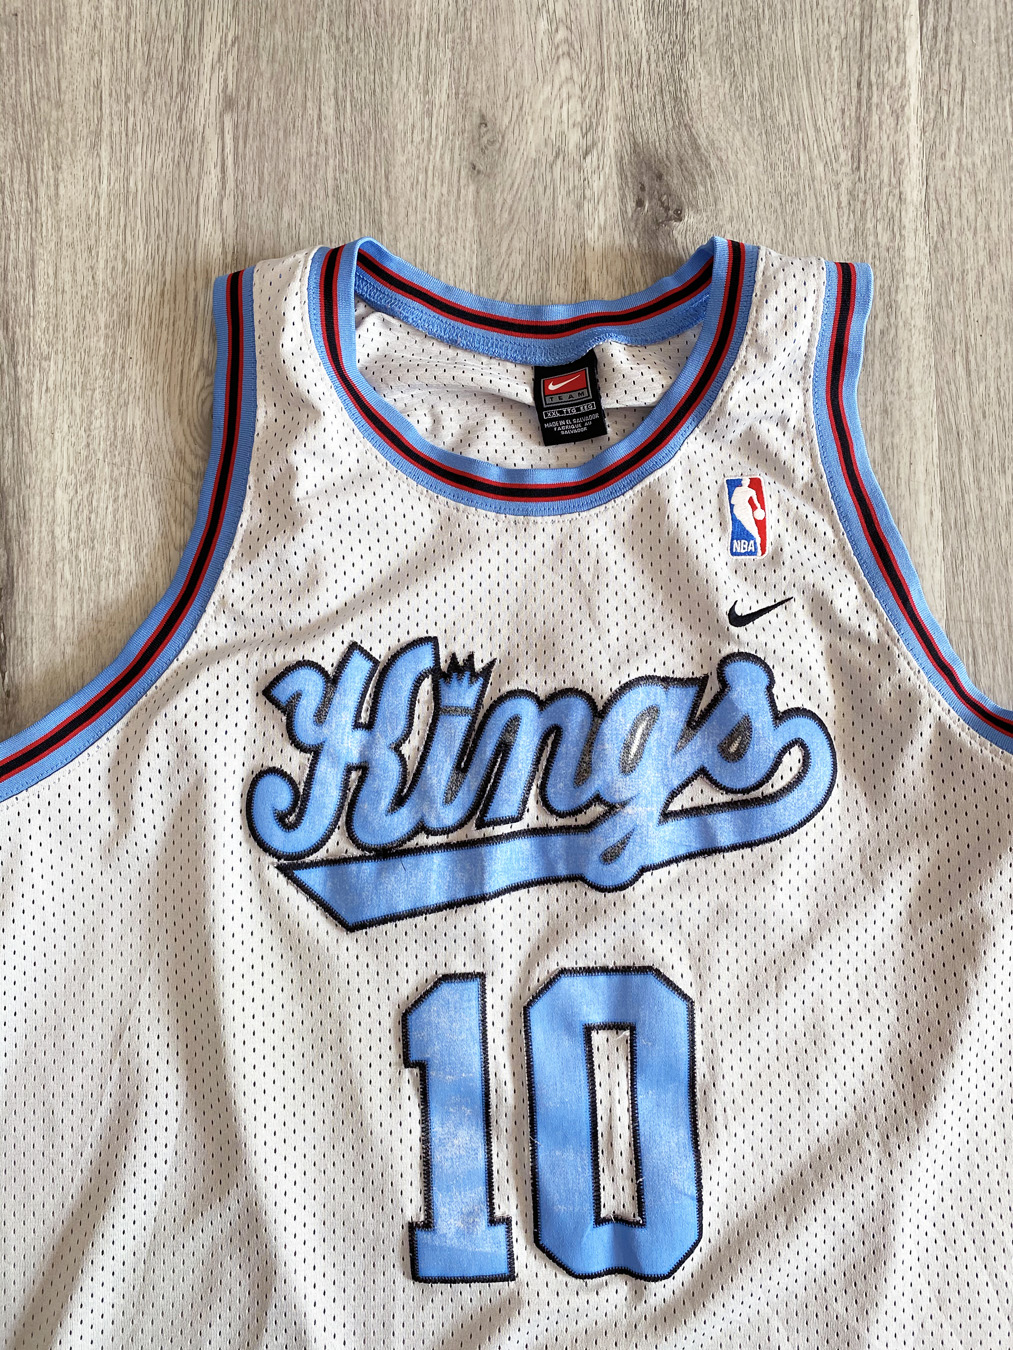 2000s Vintage Sacramento Kings Mike Bibby #10 Basketball Jersey – MIA  Vintage